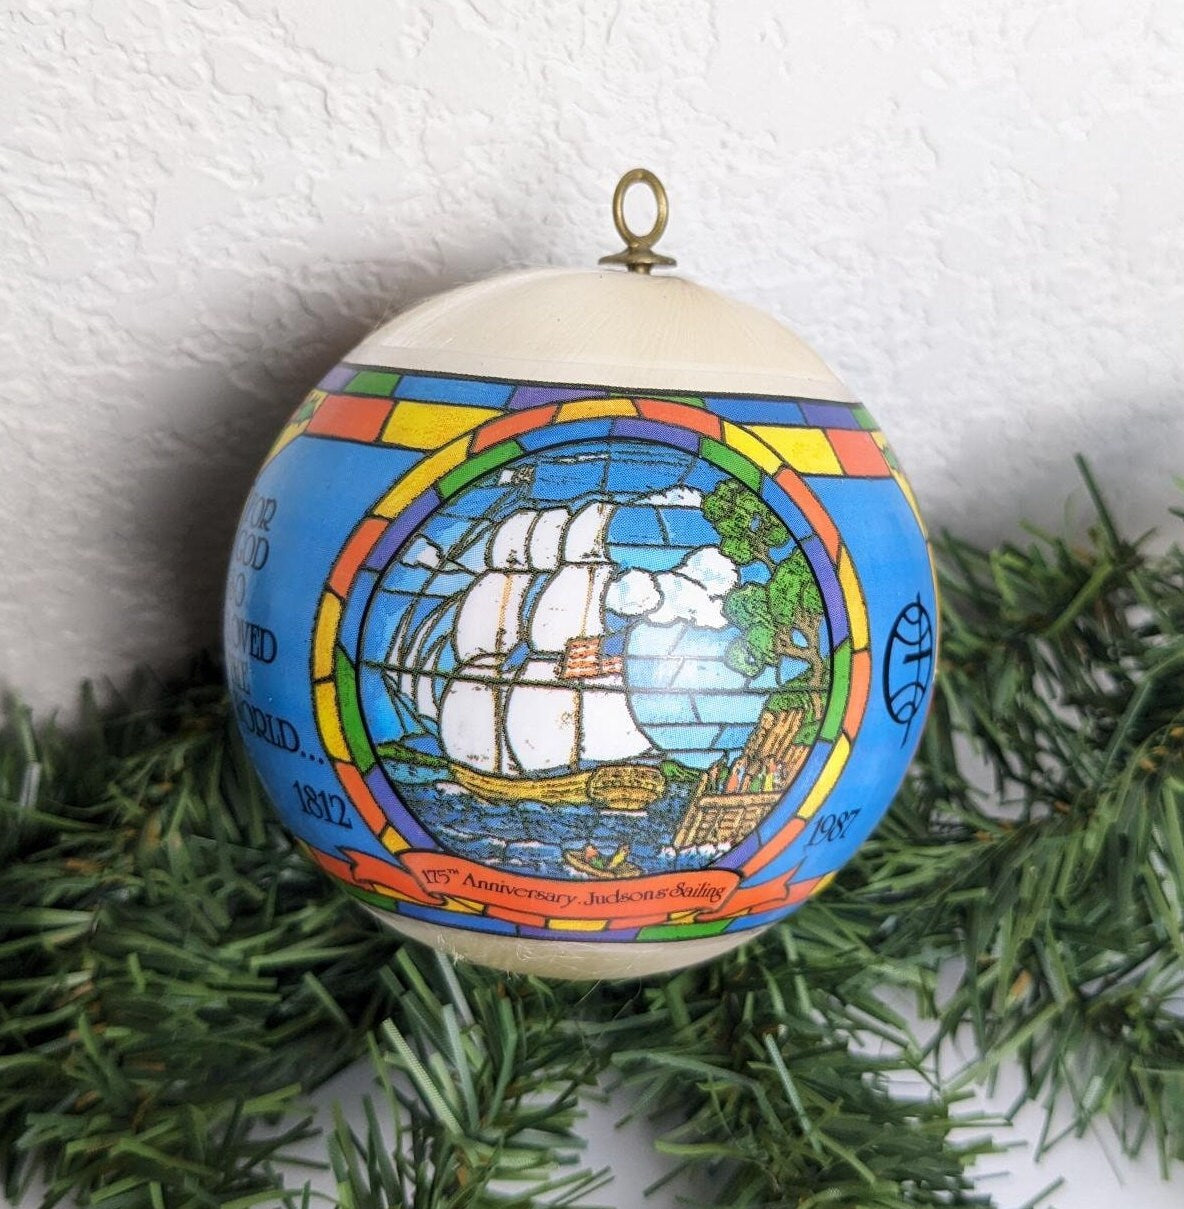 175th Anniversary Judson's Sailing Christmas Ornament